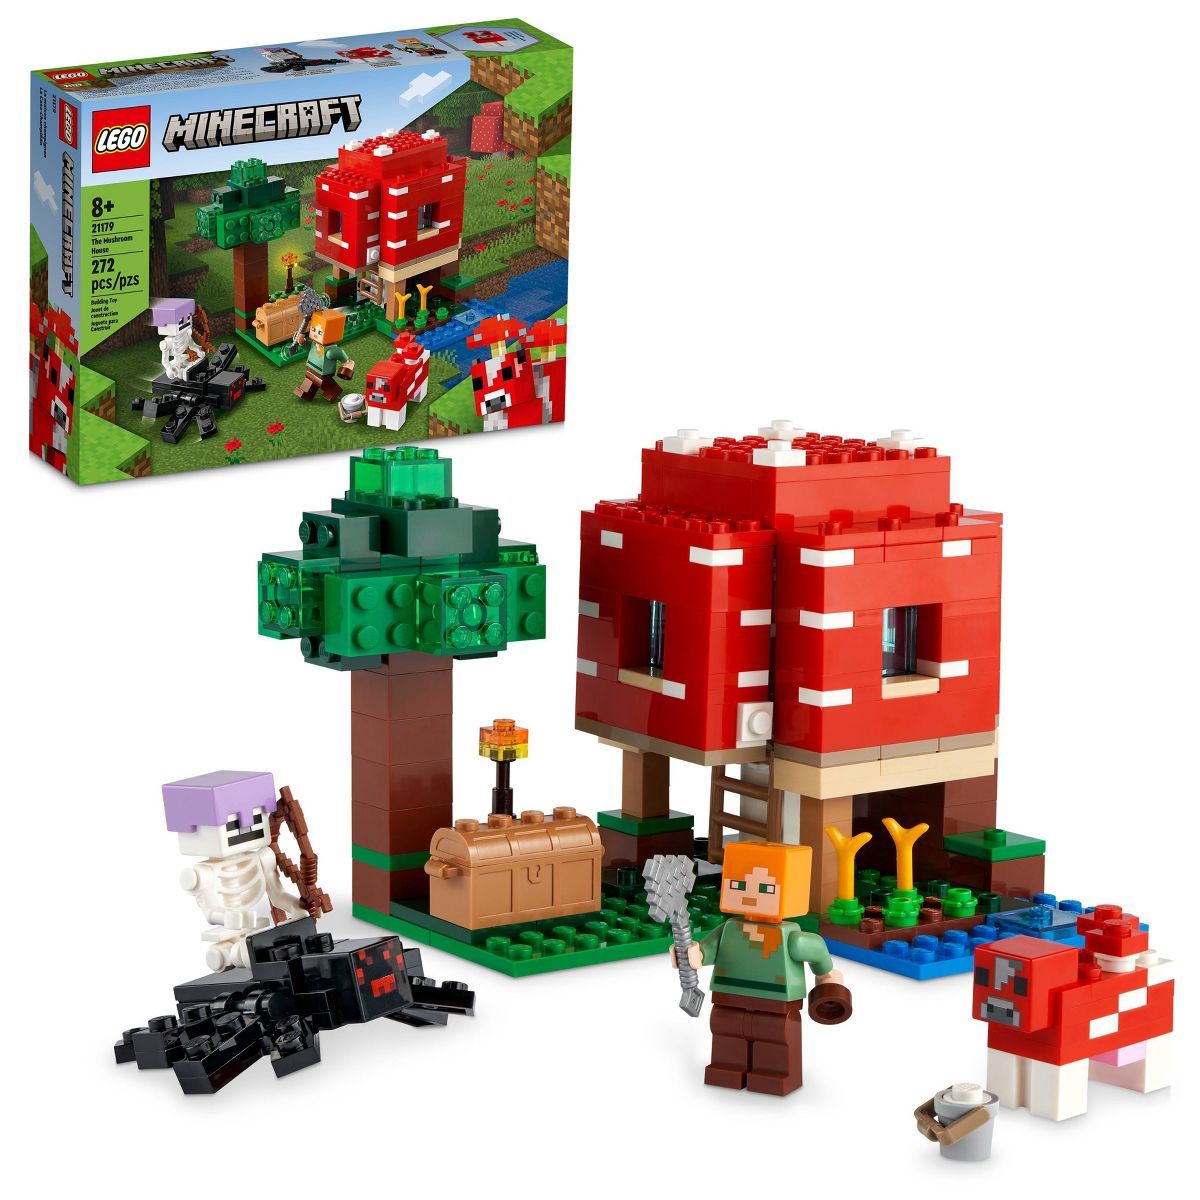 LEGO Minecraft The Mushroom House Toy 21179 | Target